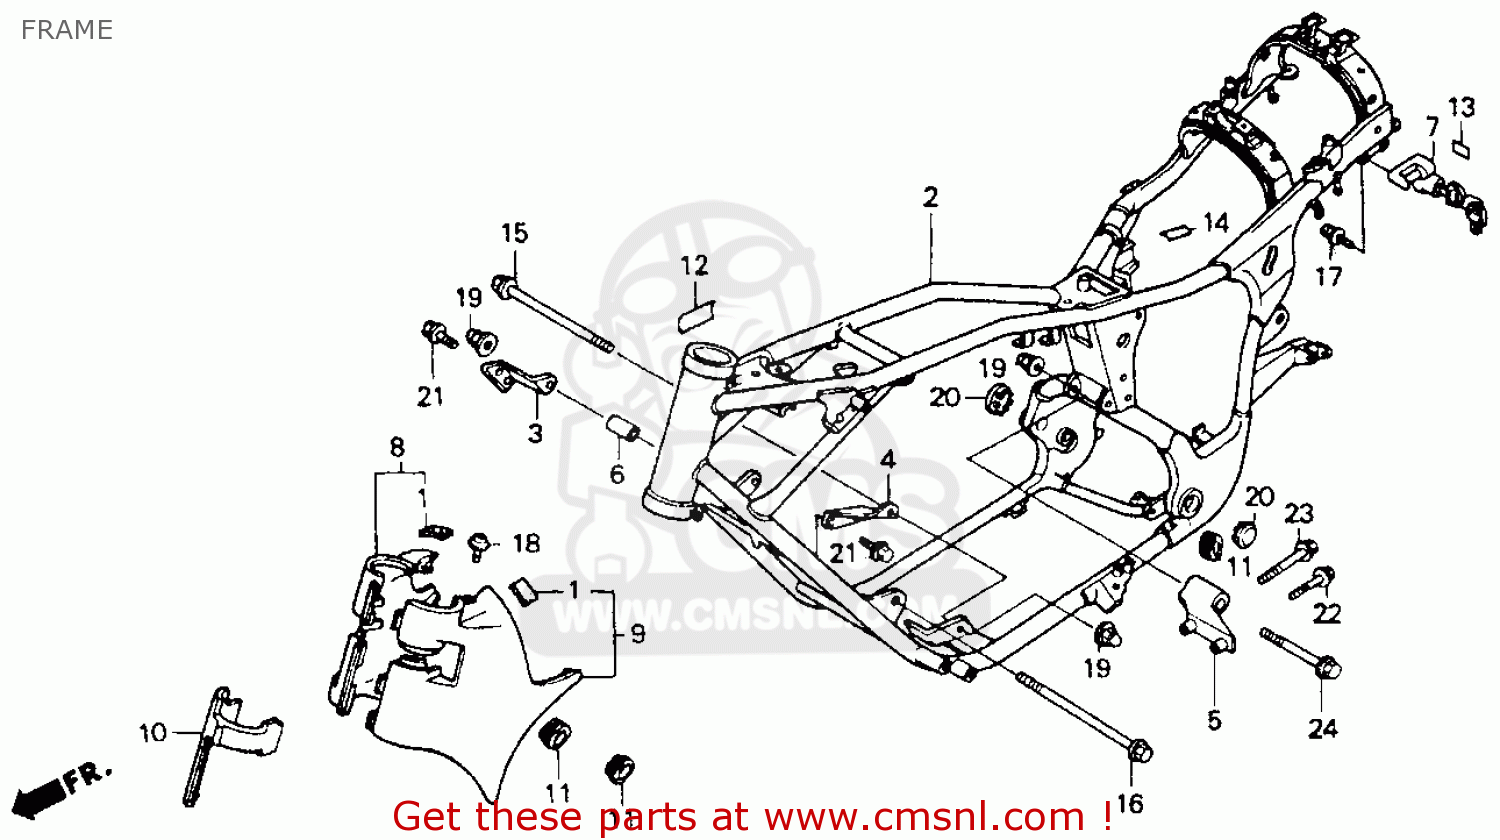 Wiring Diagram Honda Shadow Vt1100